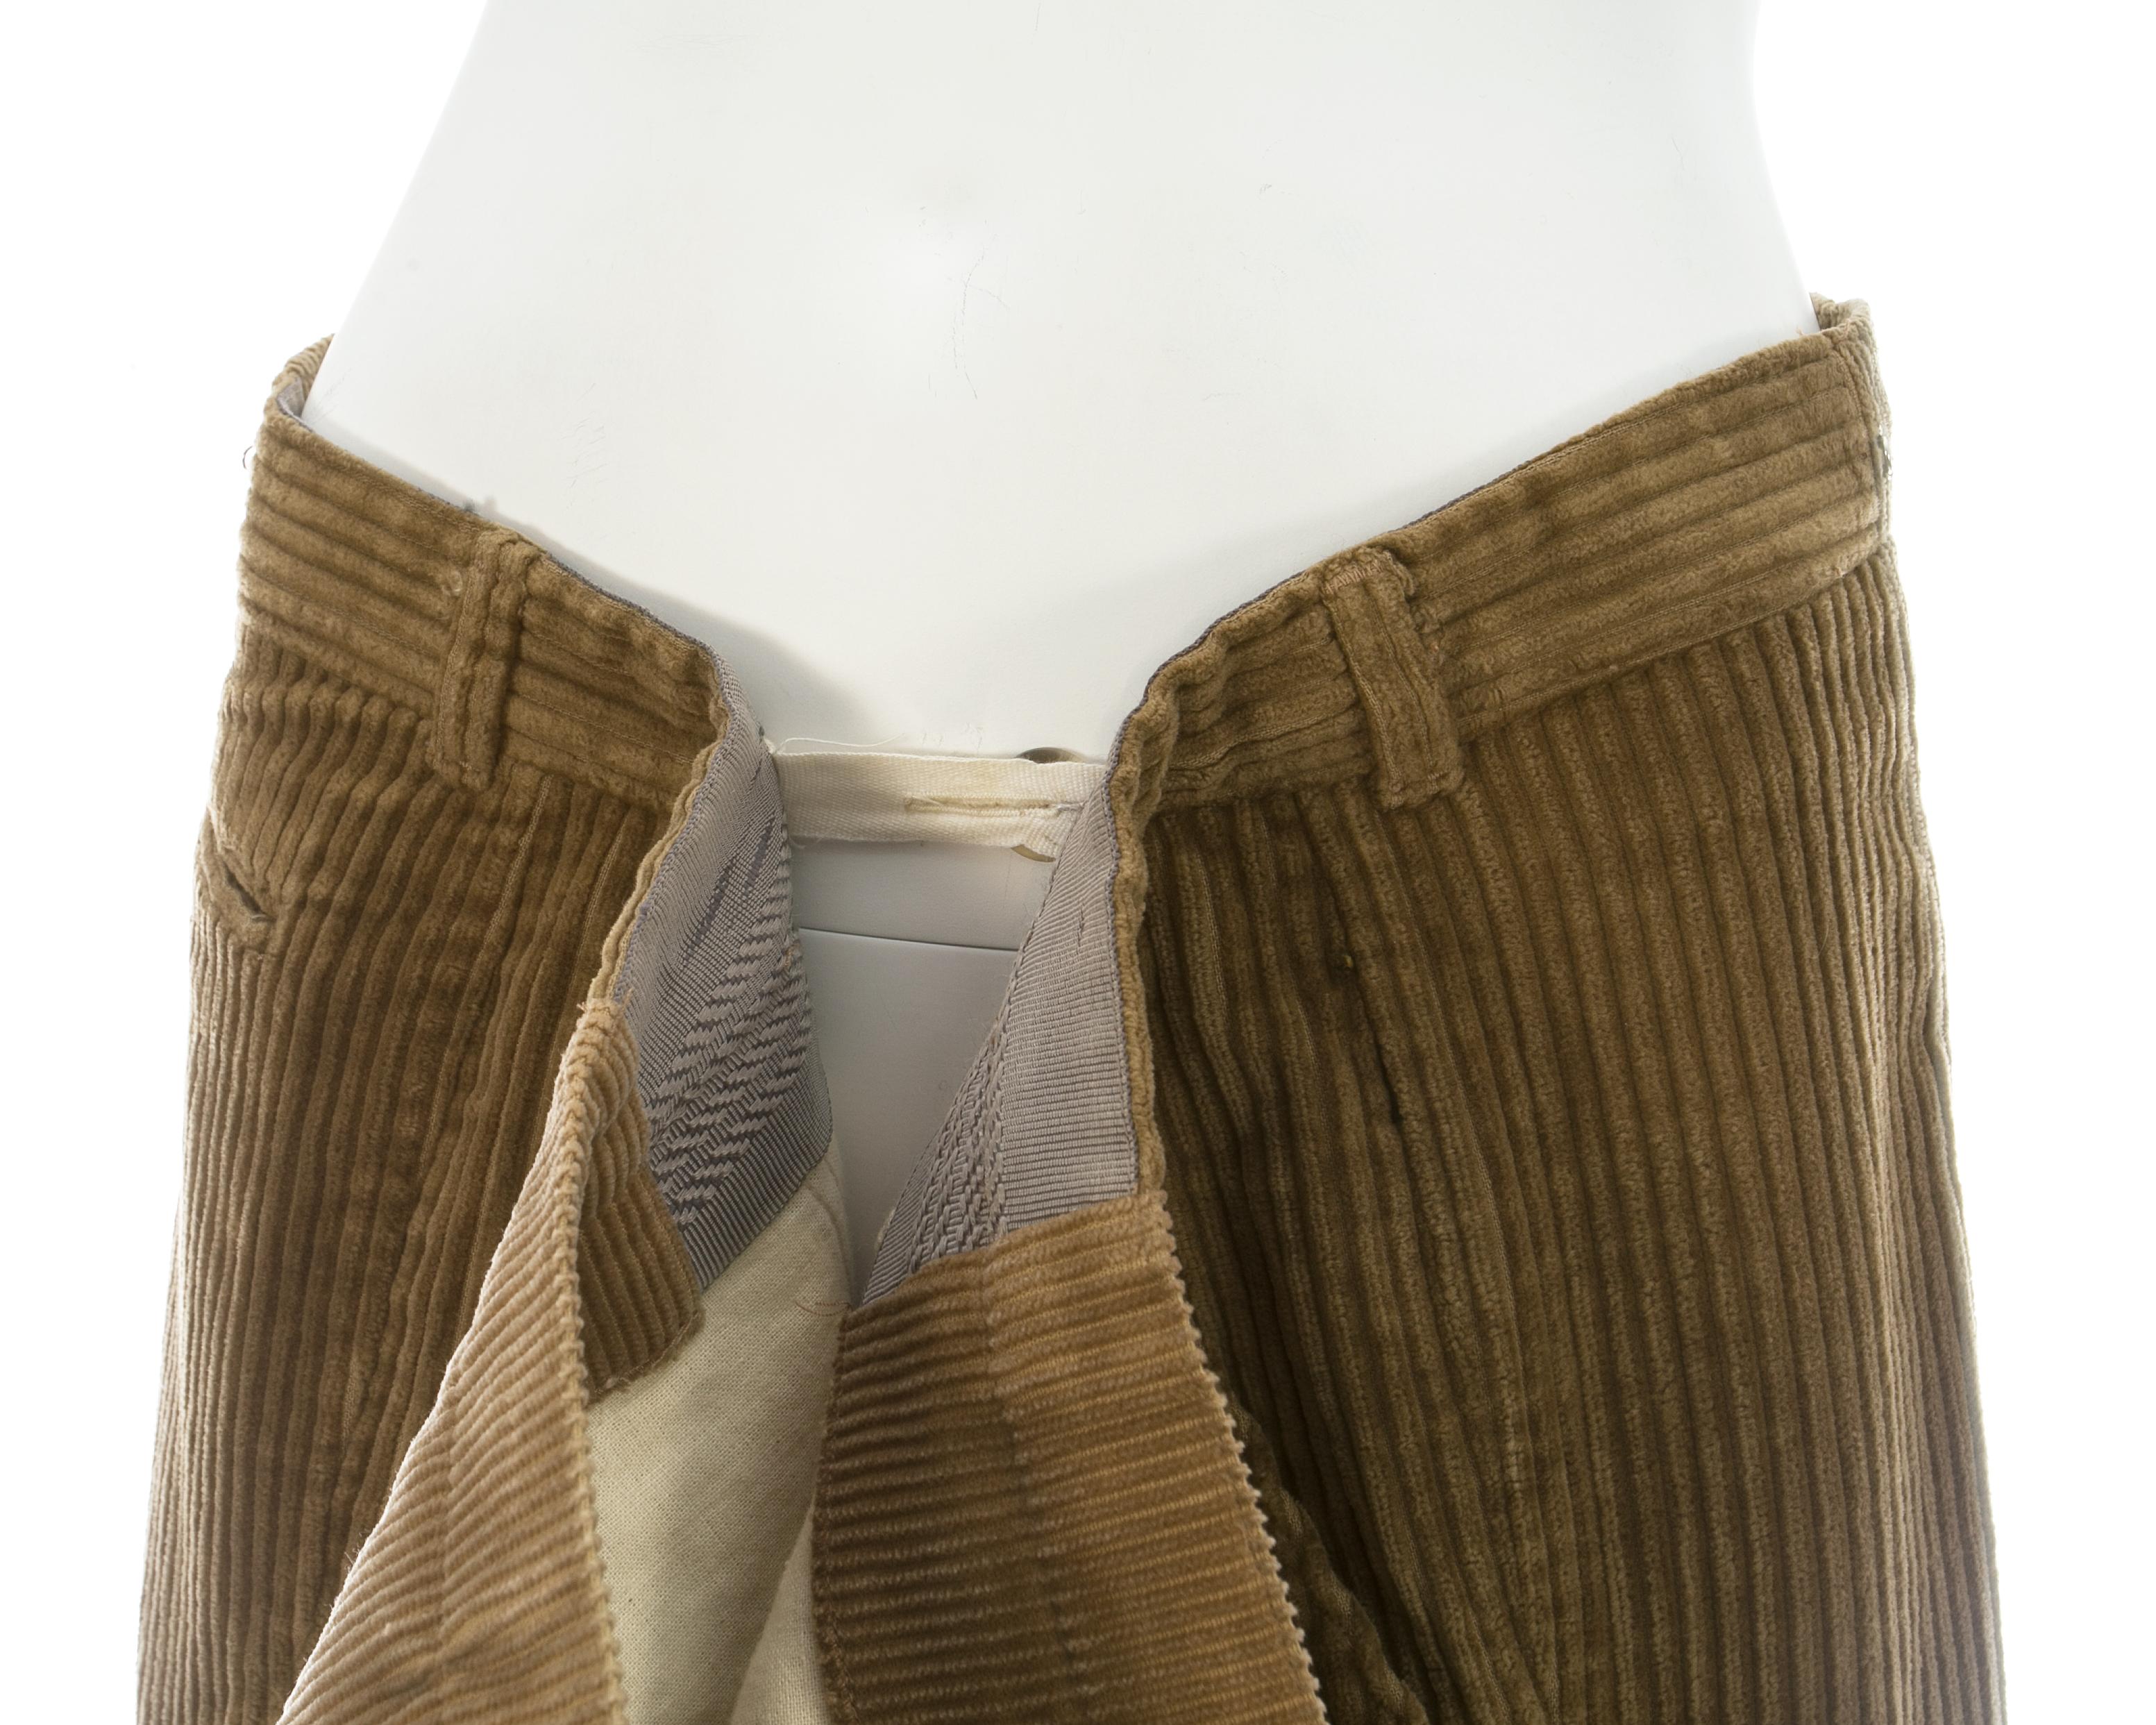 Martin Margiela artisanal tan corduroy reconstructed oversized pants, fw 2000 For Sale 3